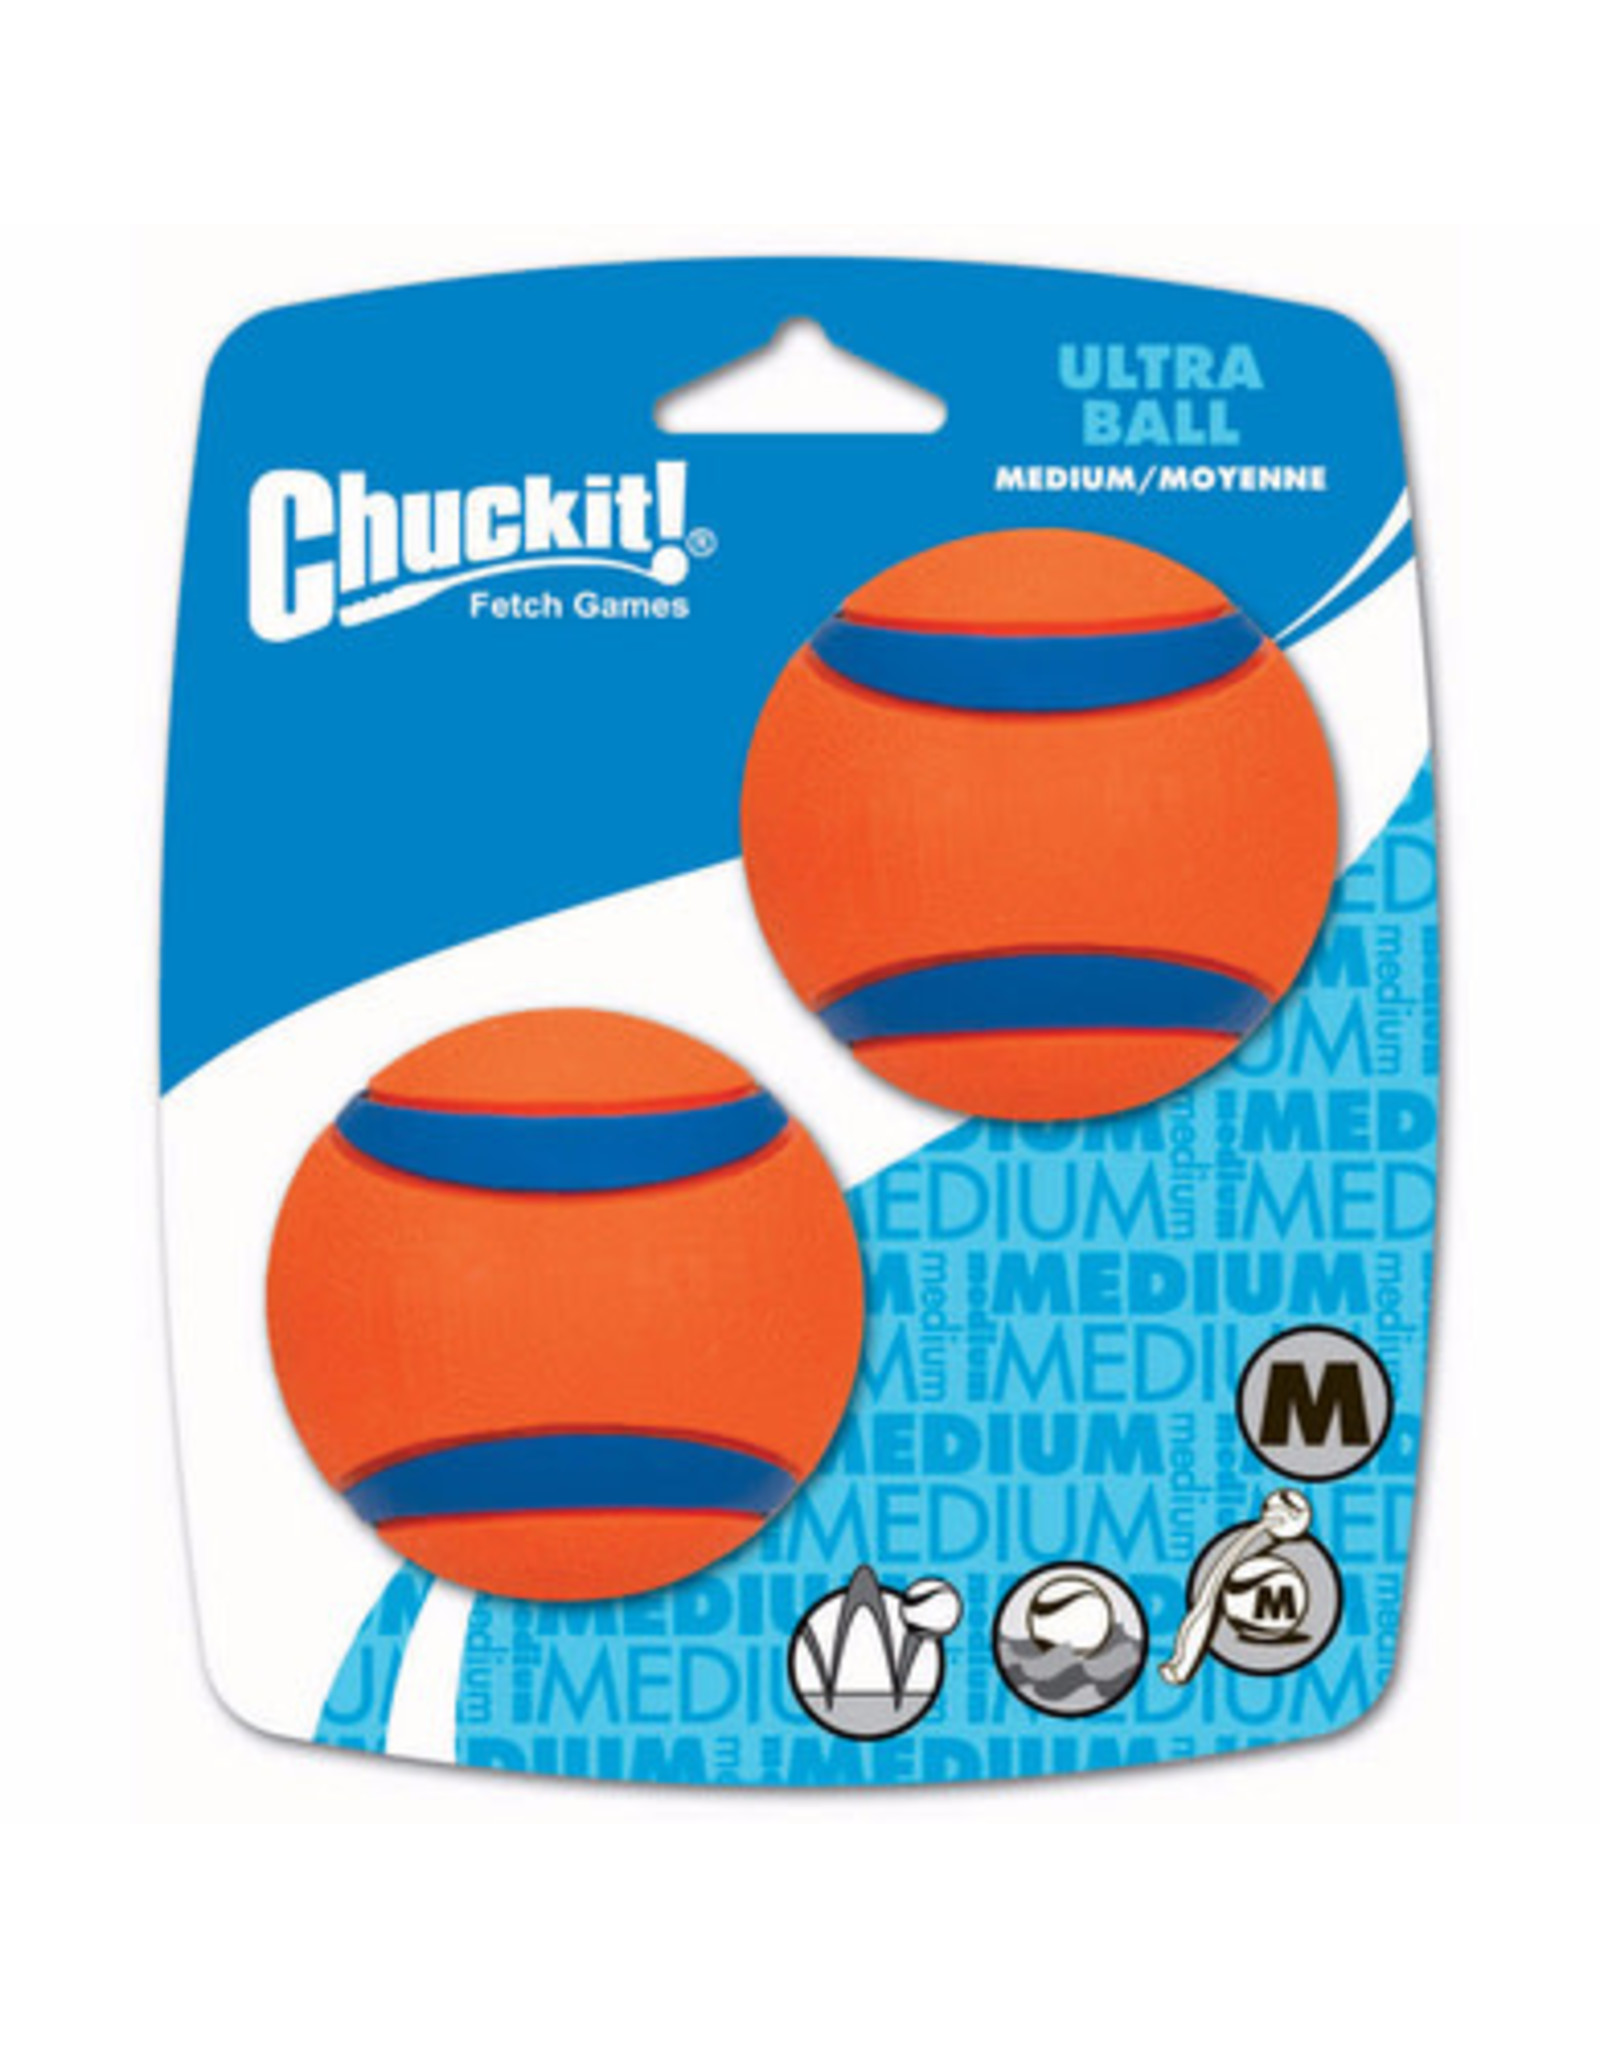 Chuckit! Ultra Balls 2-Pack Medium